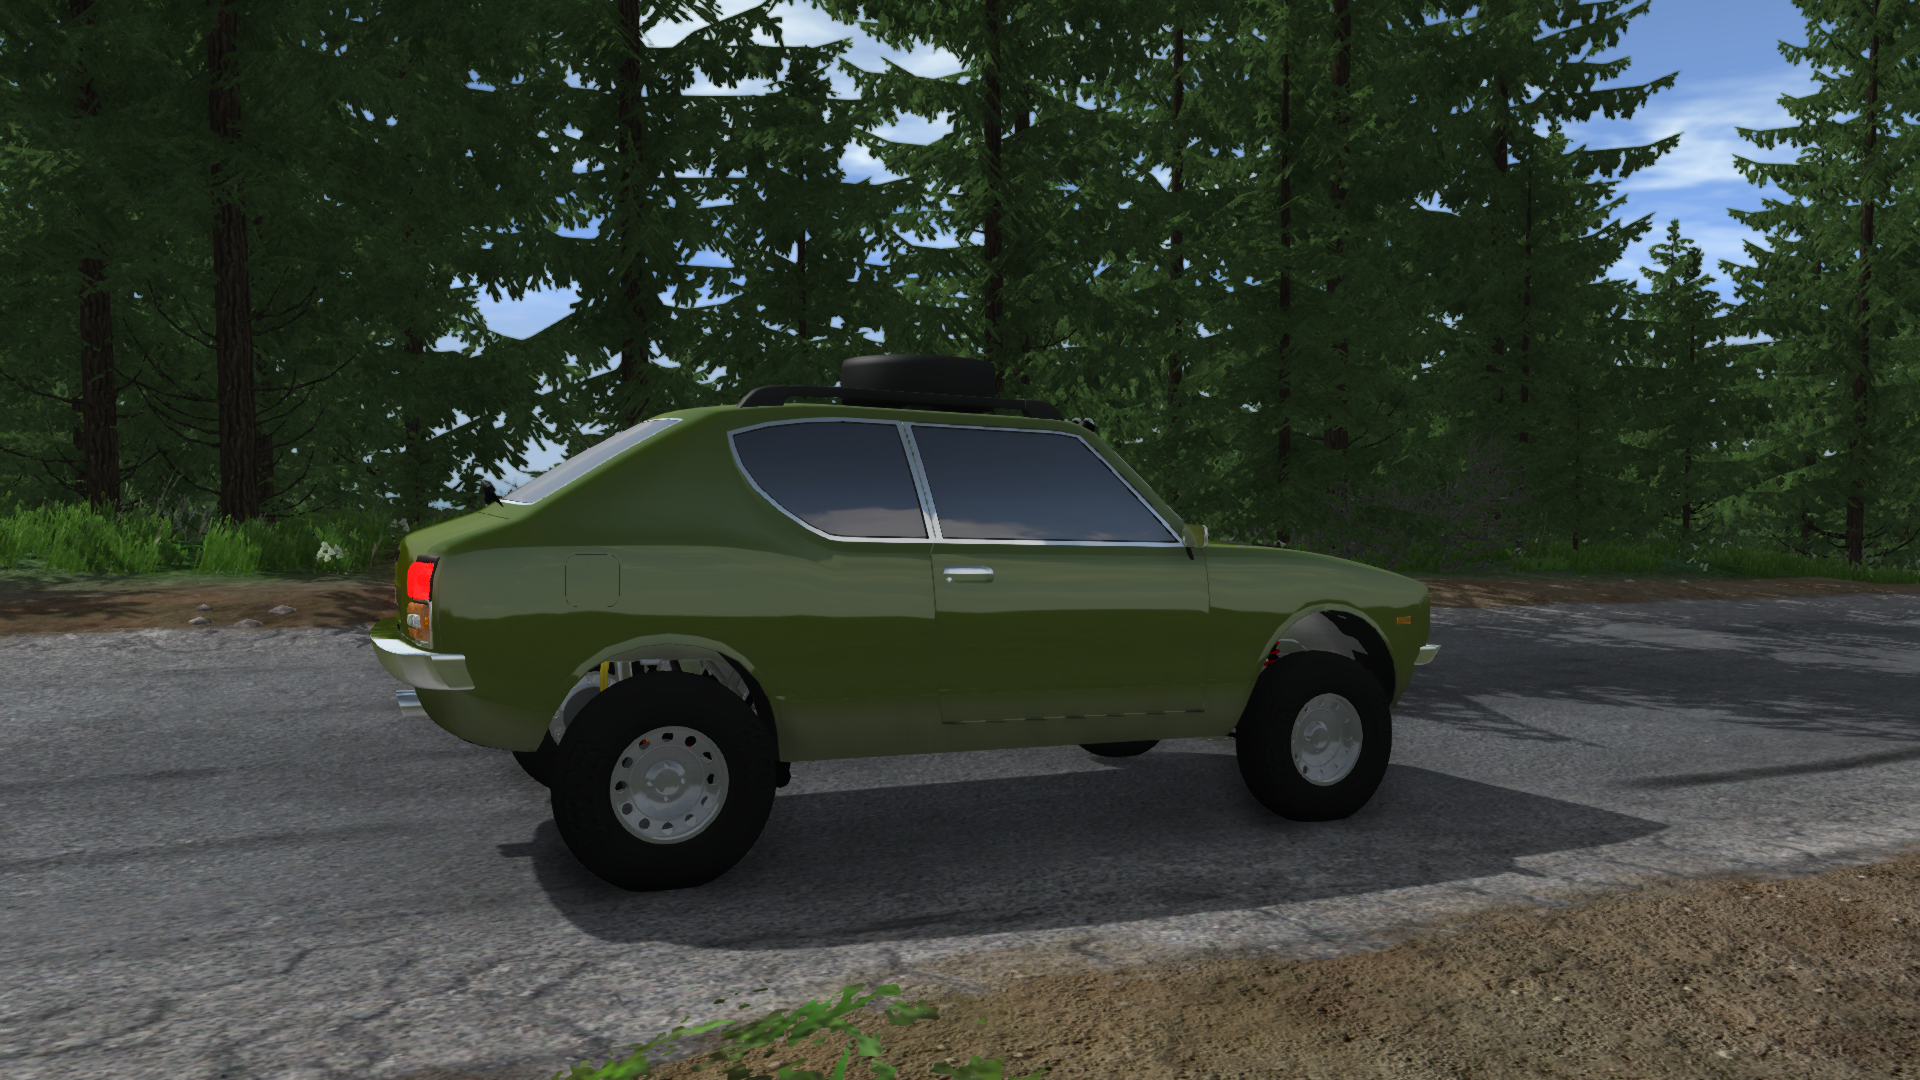 Мод сатсума универсал. Сатсума из май саммер кар. My Summer car ВАЗ 2106. Подвеска май саммер кар. Сатсума ГТ май саммер кар зеленая.